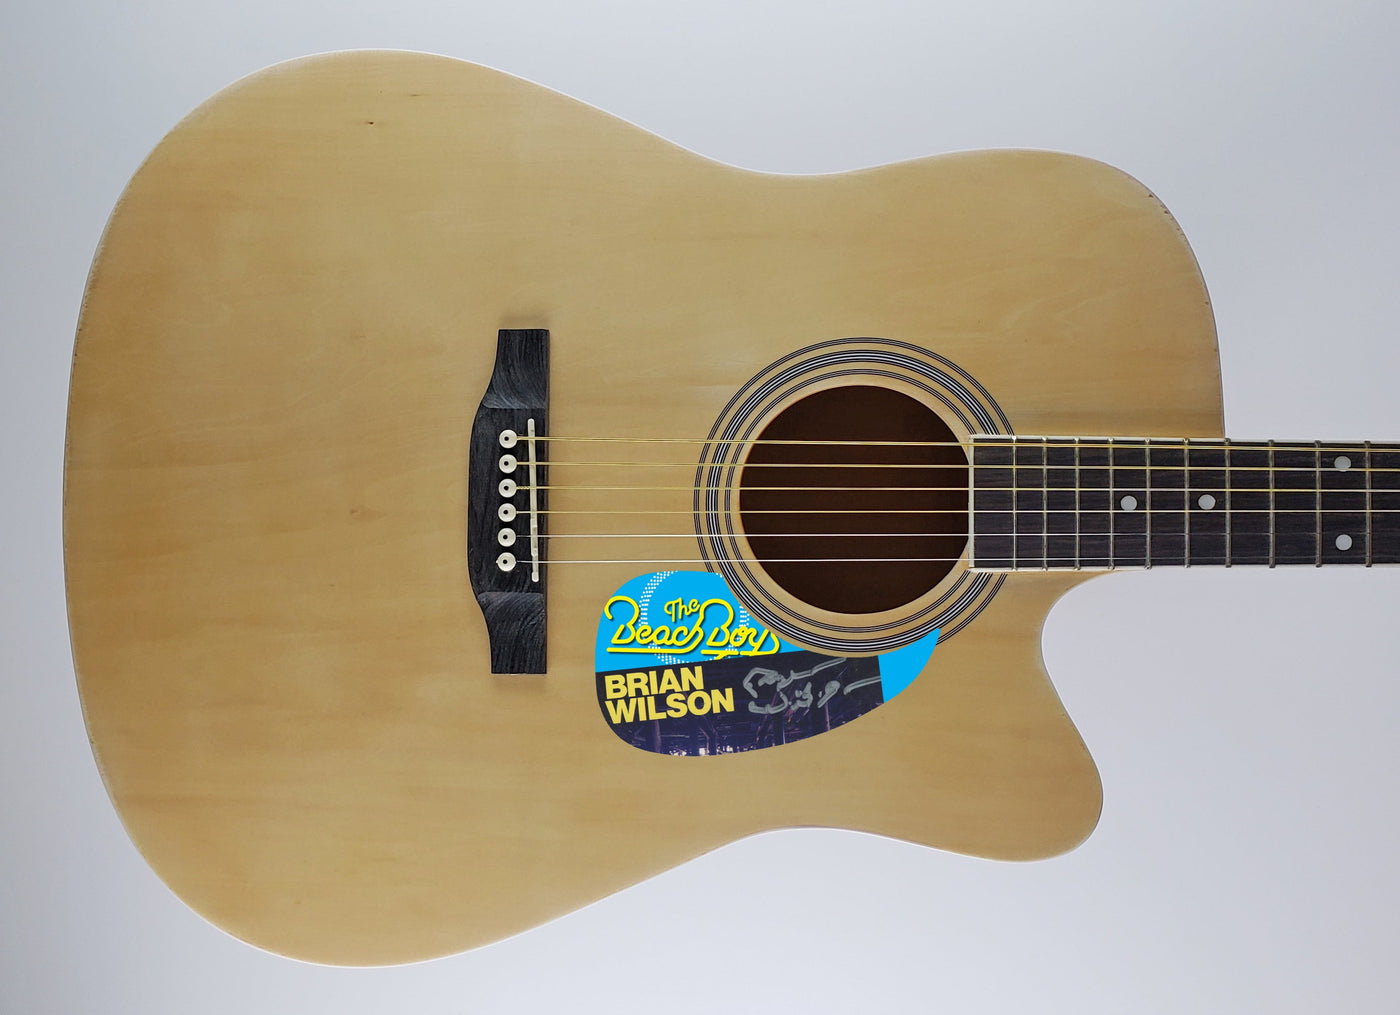 Beach Boys Brian Wilson Autographed Signed Acoustic Guitar ACOA